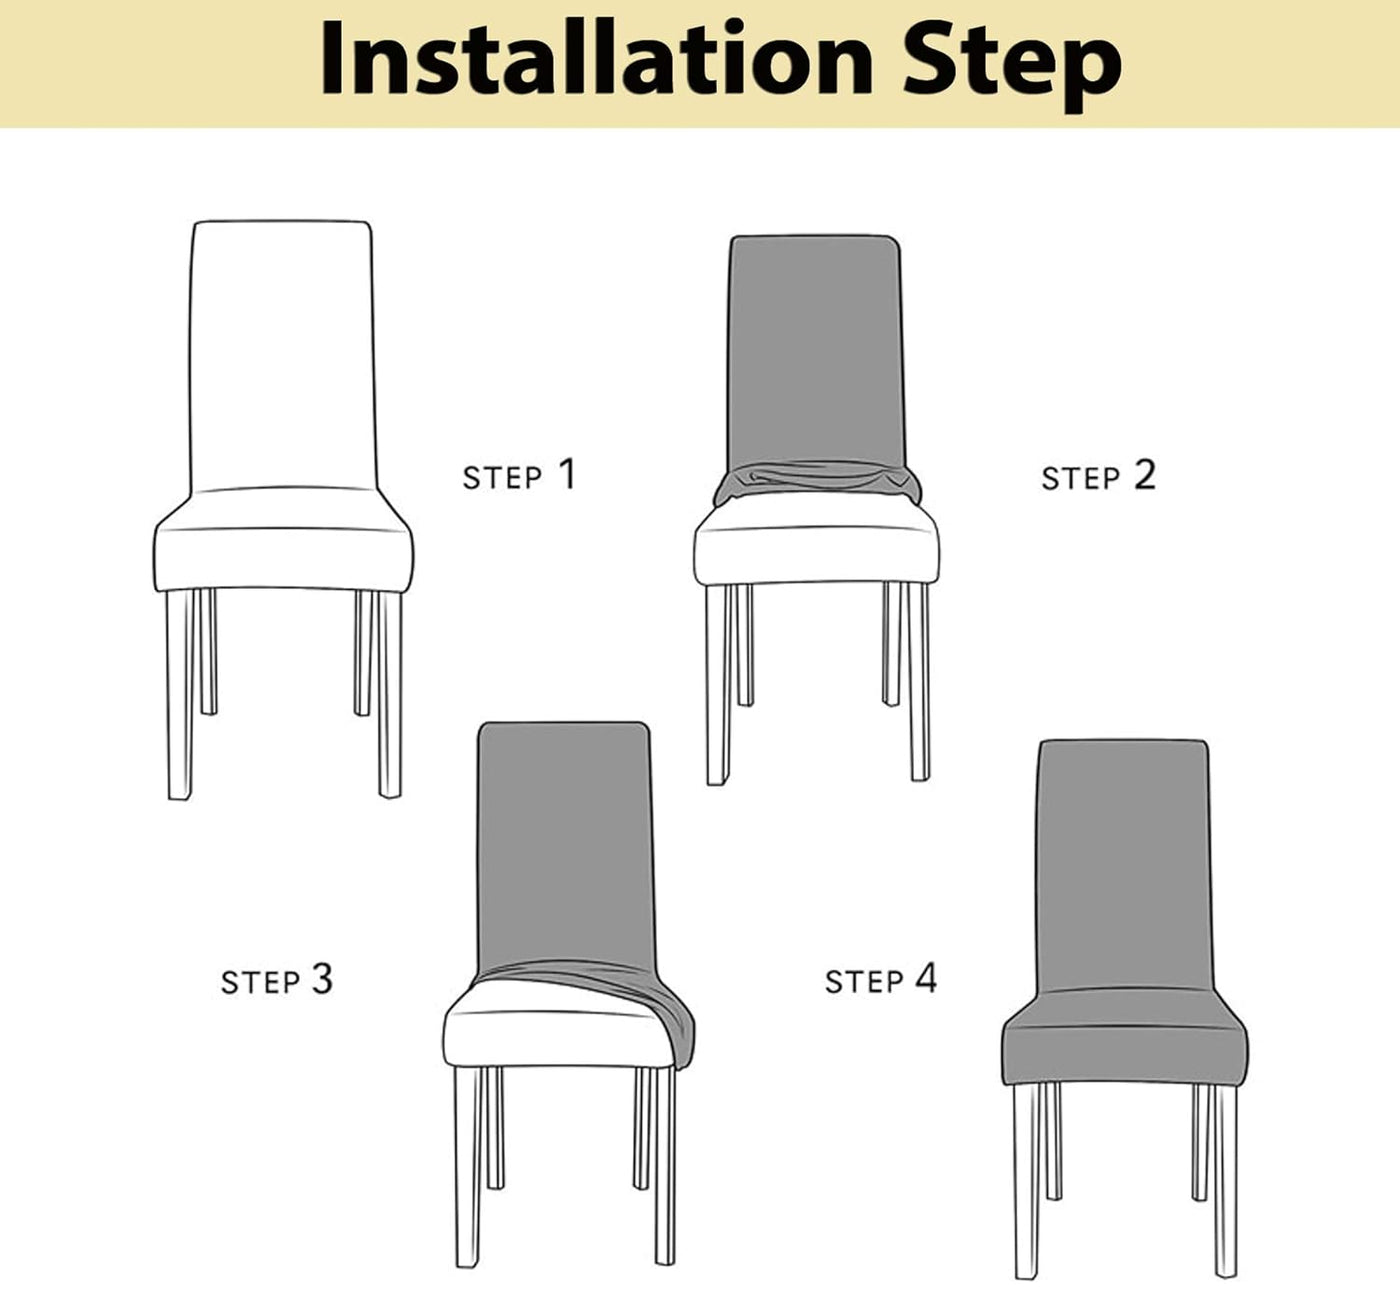 Elastic Chair Cover (Multi Ripple)